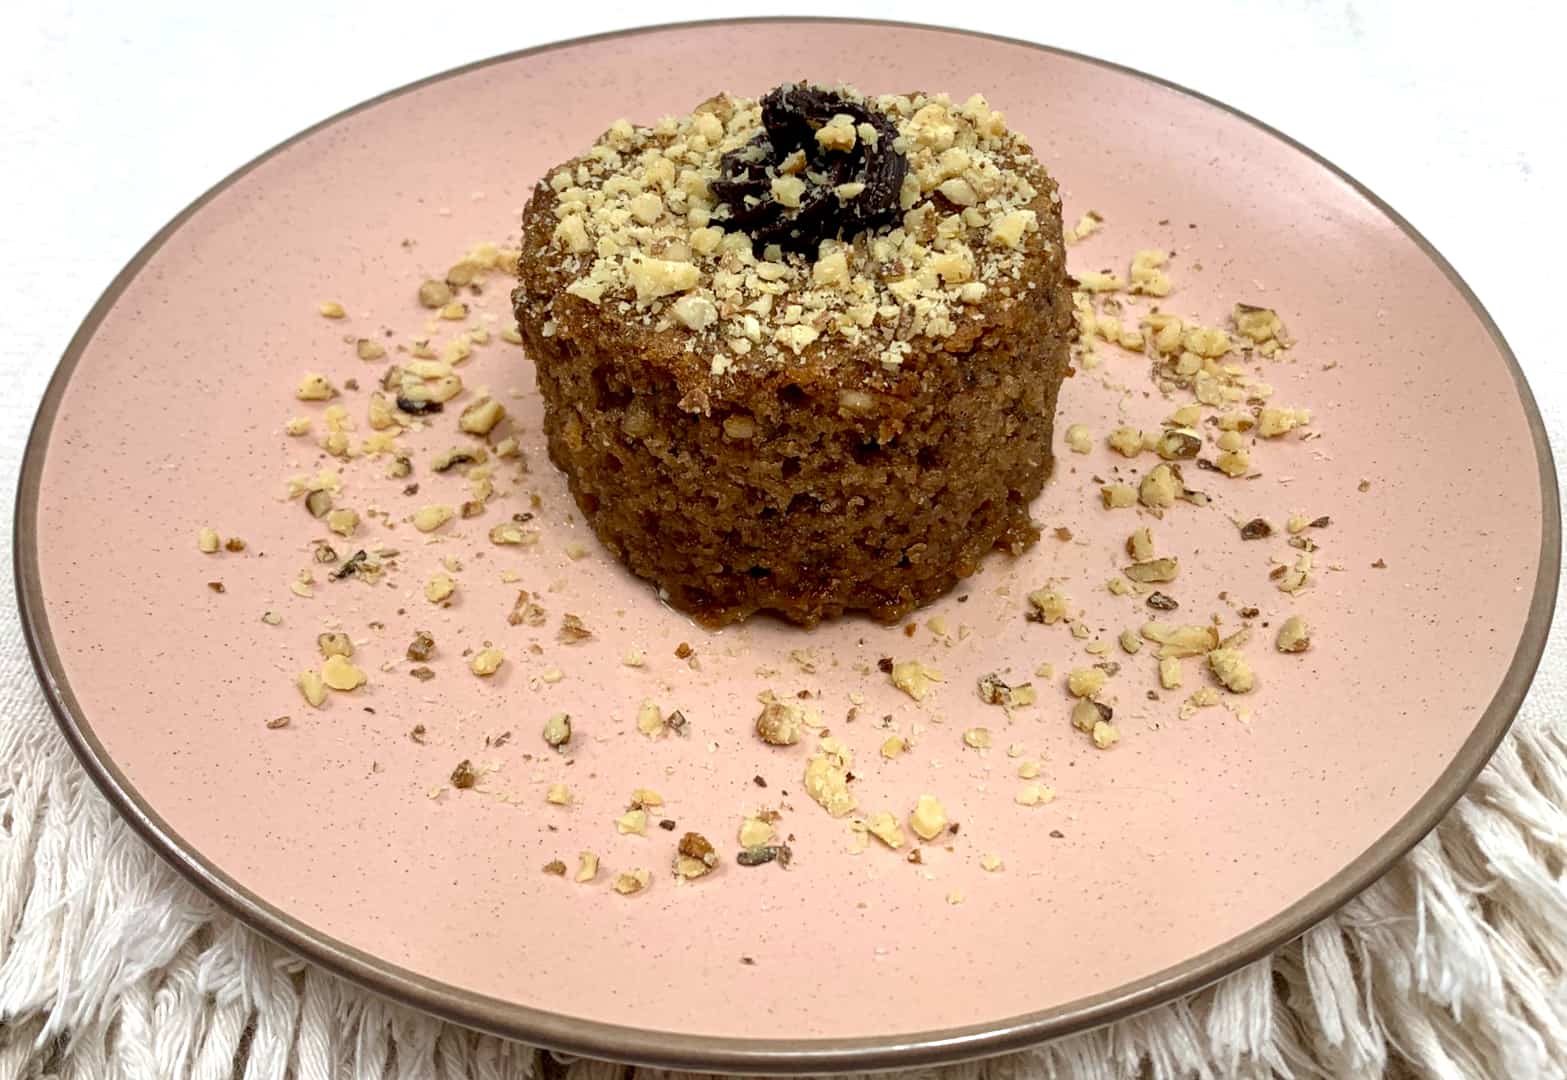 Karidopita with breadcrumbs (Walnut cake with breadcrumbs) served